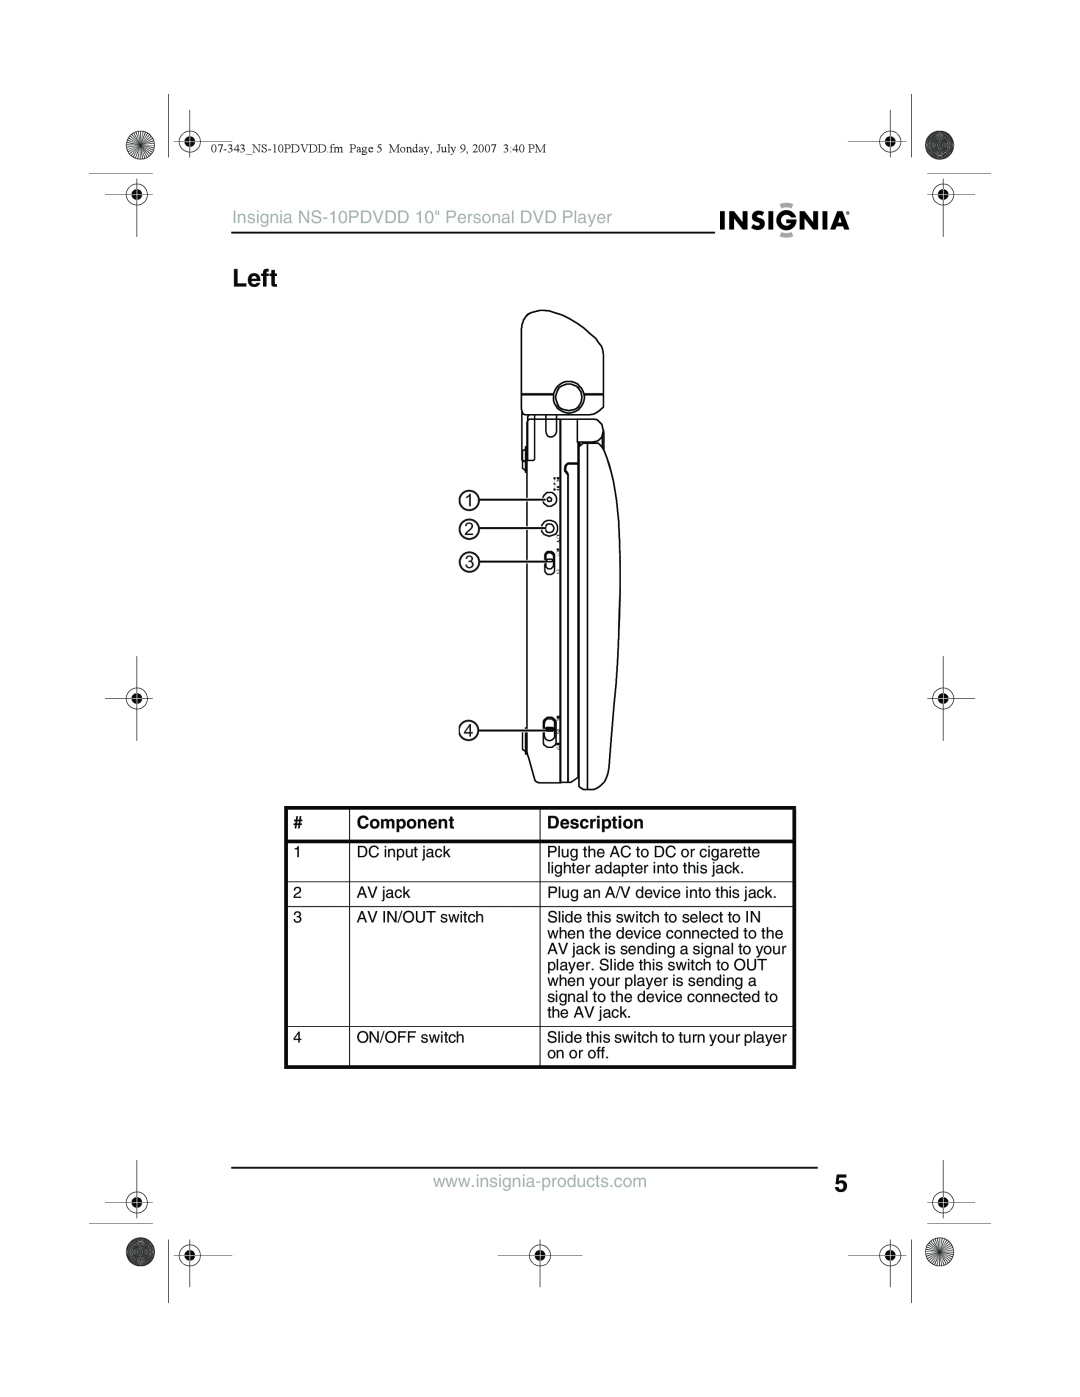 Insignia manual Left, Insignia NS-10PDVDD 10 Personal DVD Player, Component, Description 